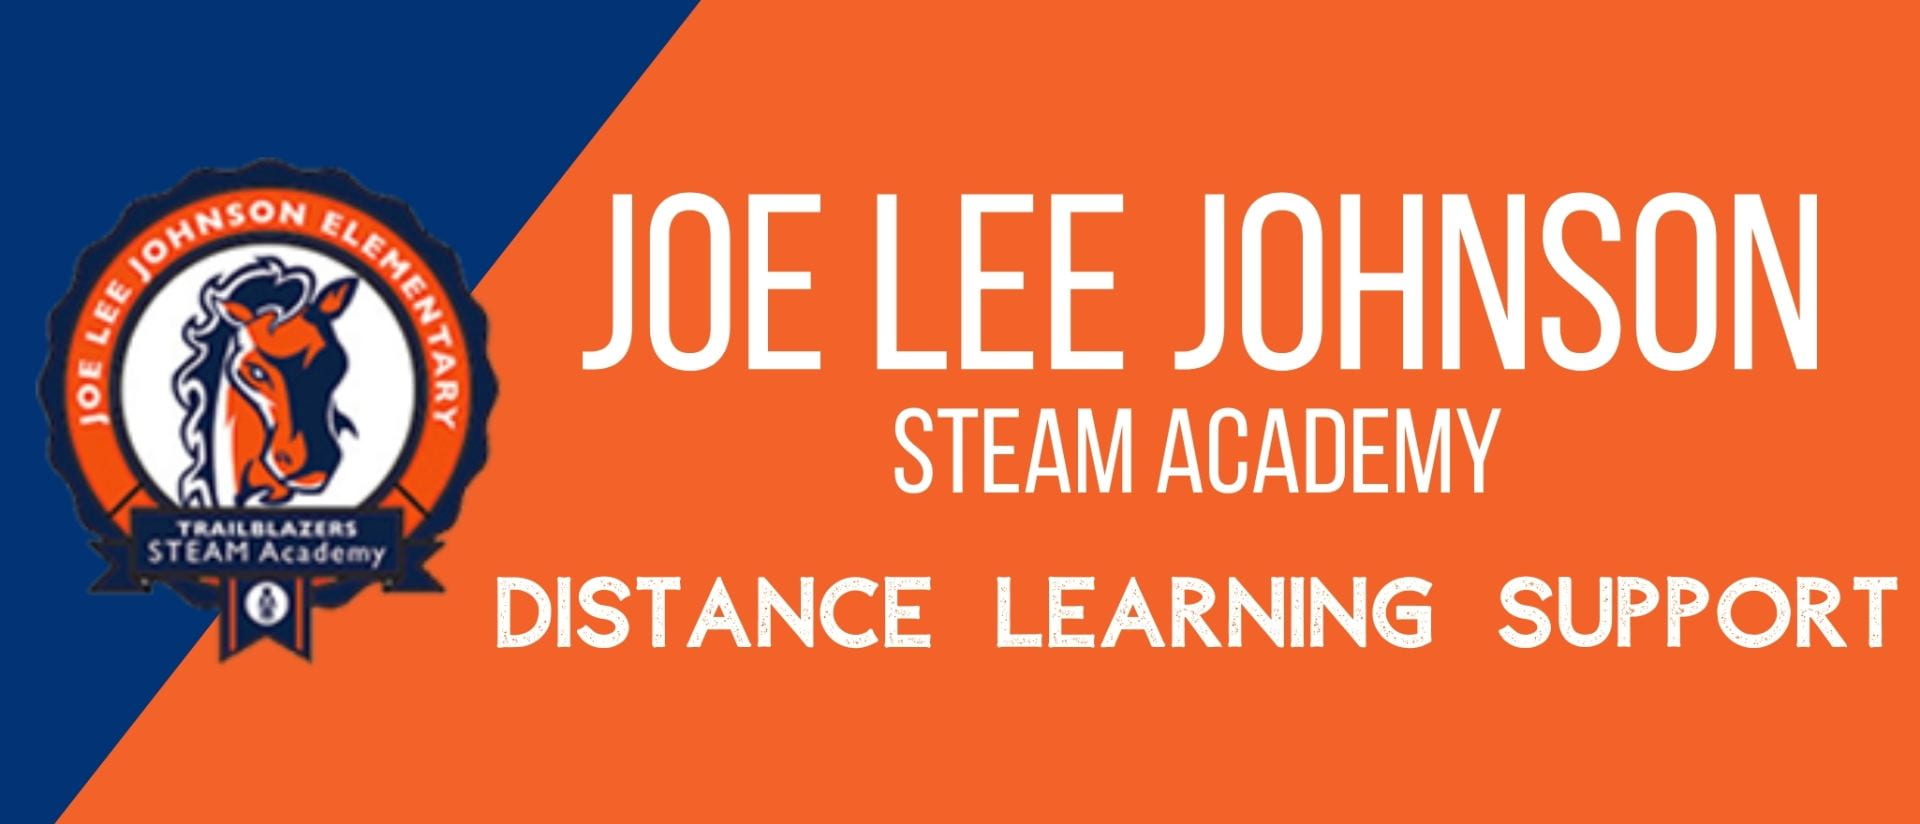 Joe Lee Johnson STEAM Academy Distance Learning Support Header Image